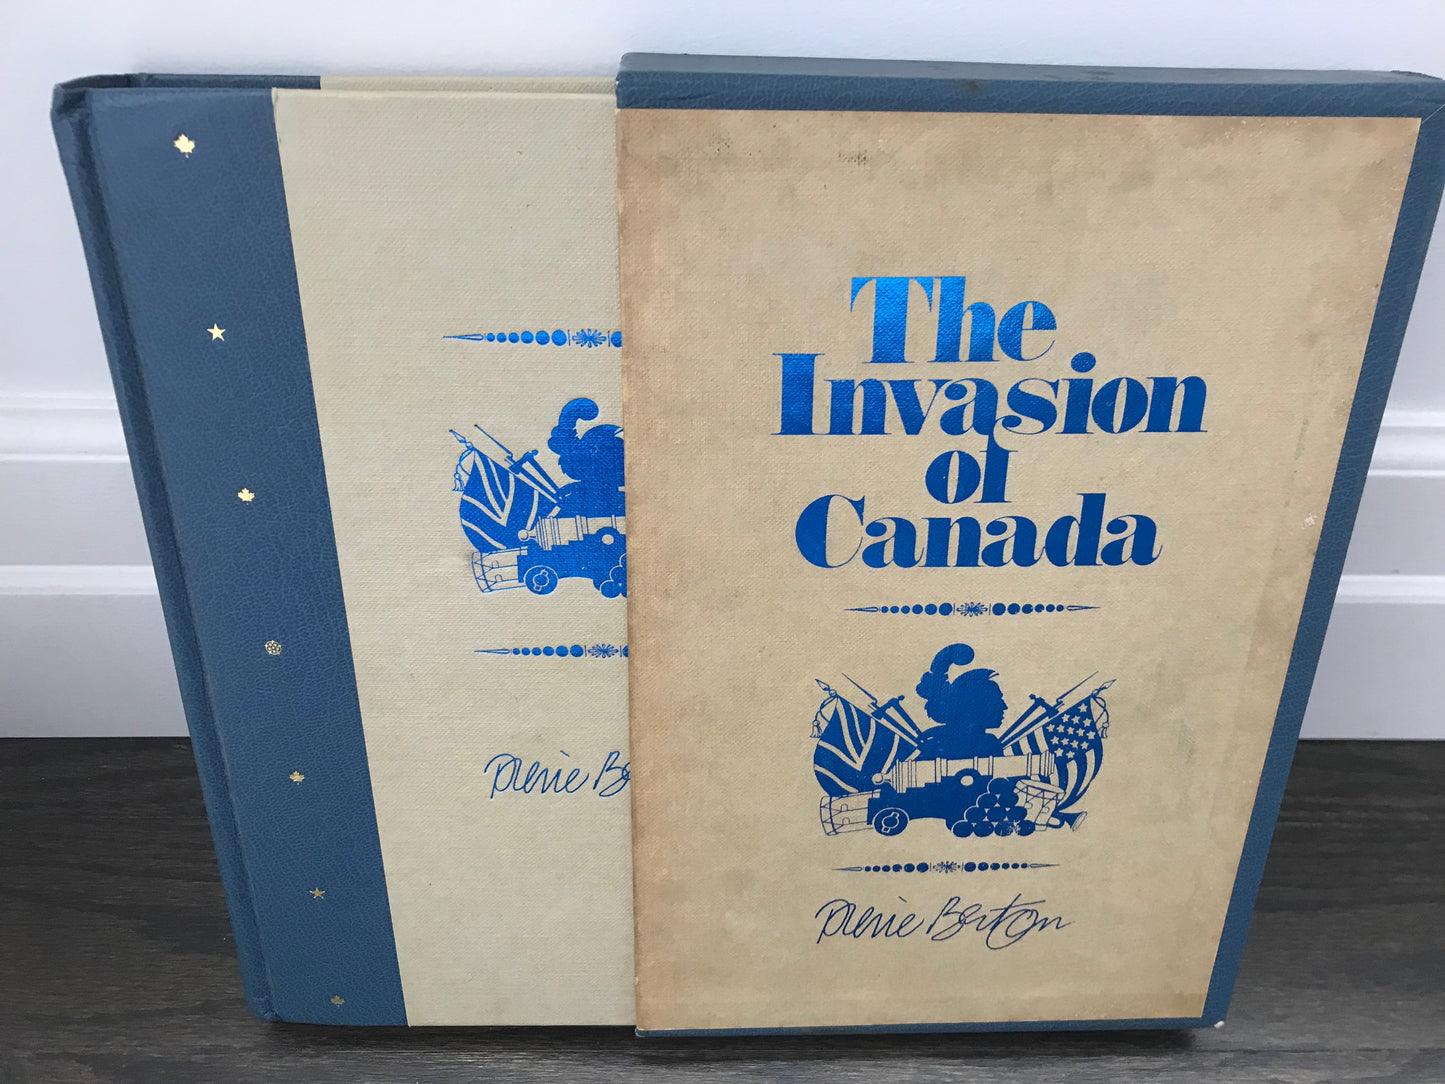 THE INVASION OF CANADA 1812-1813  - PIERRE BERTON BooksCardsNBikes